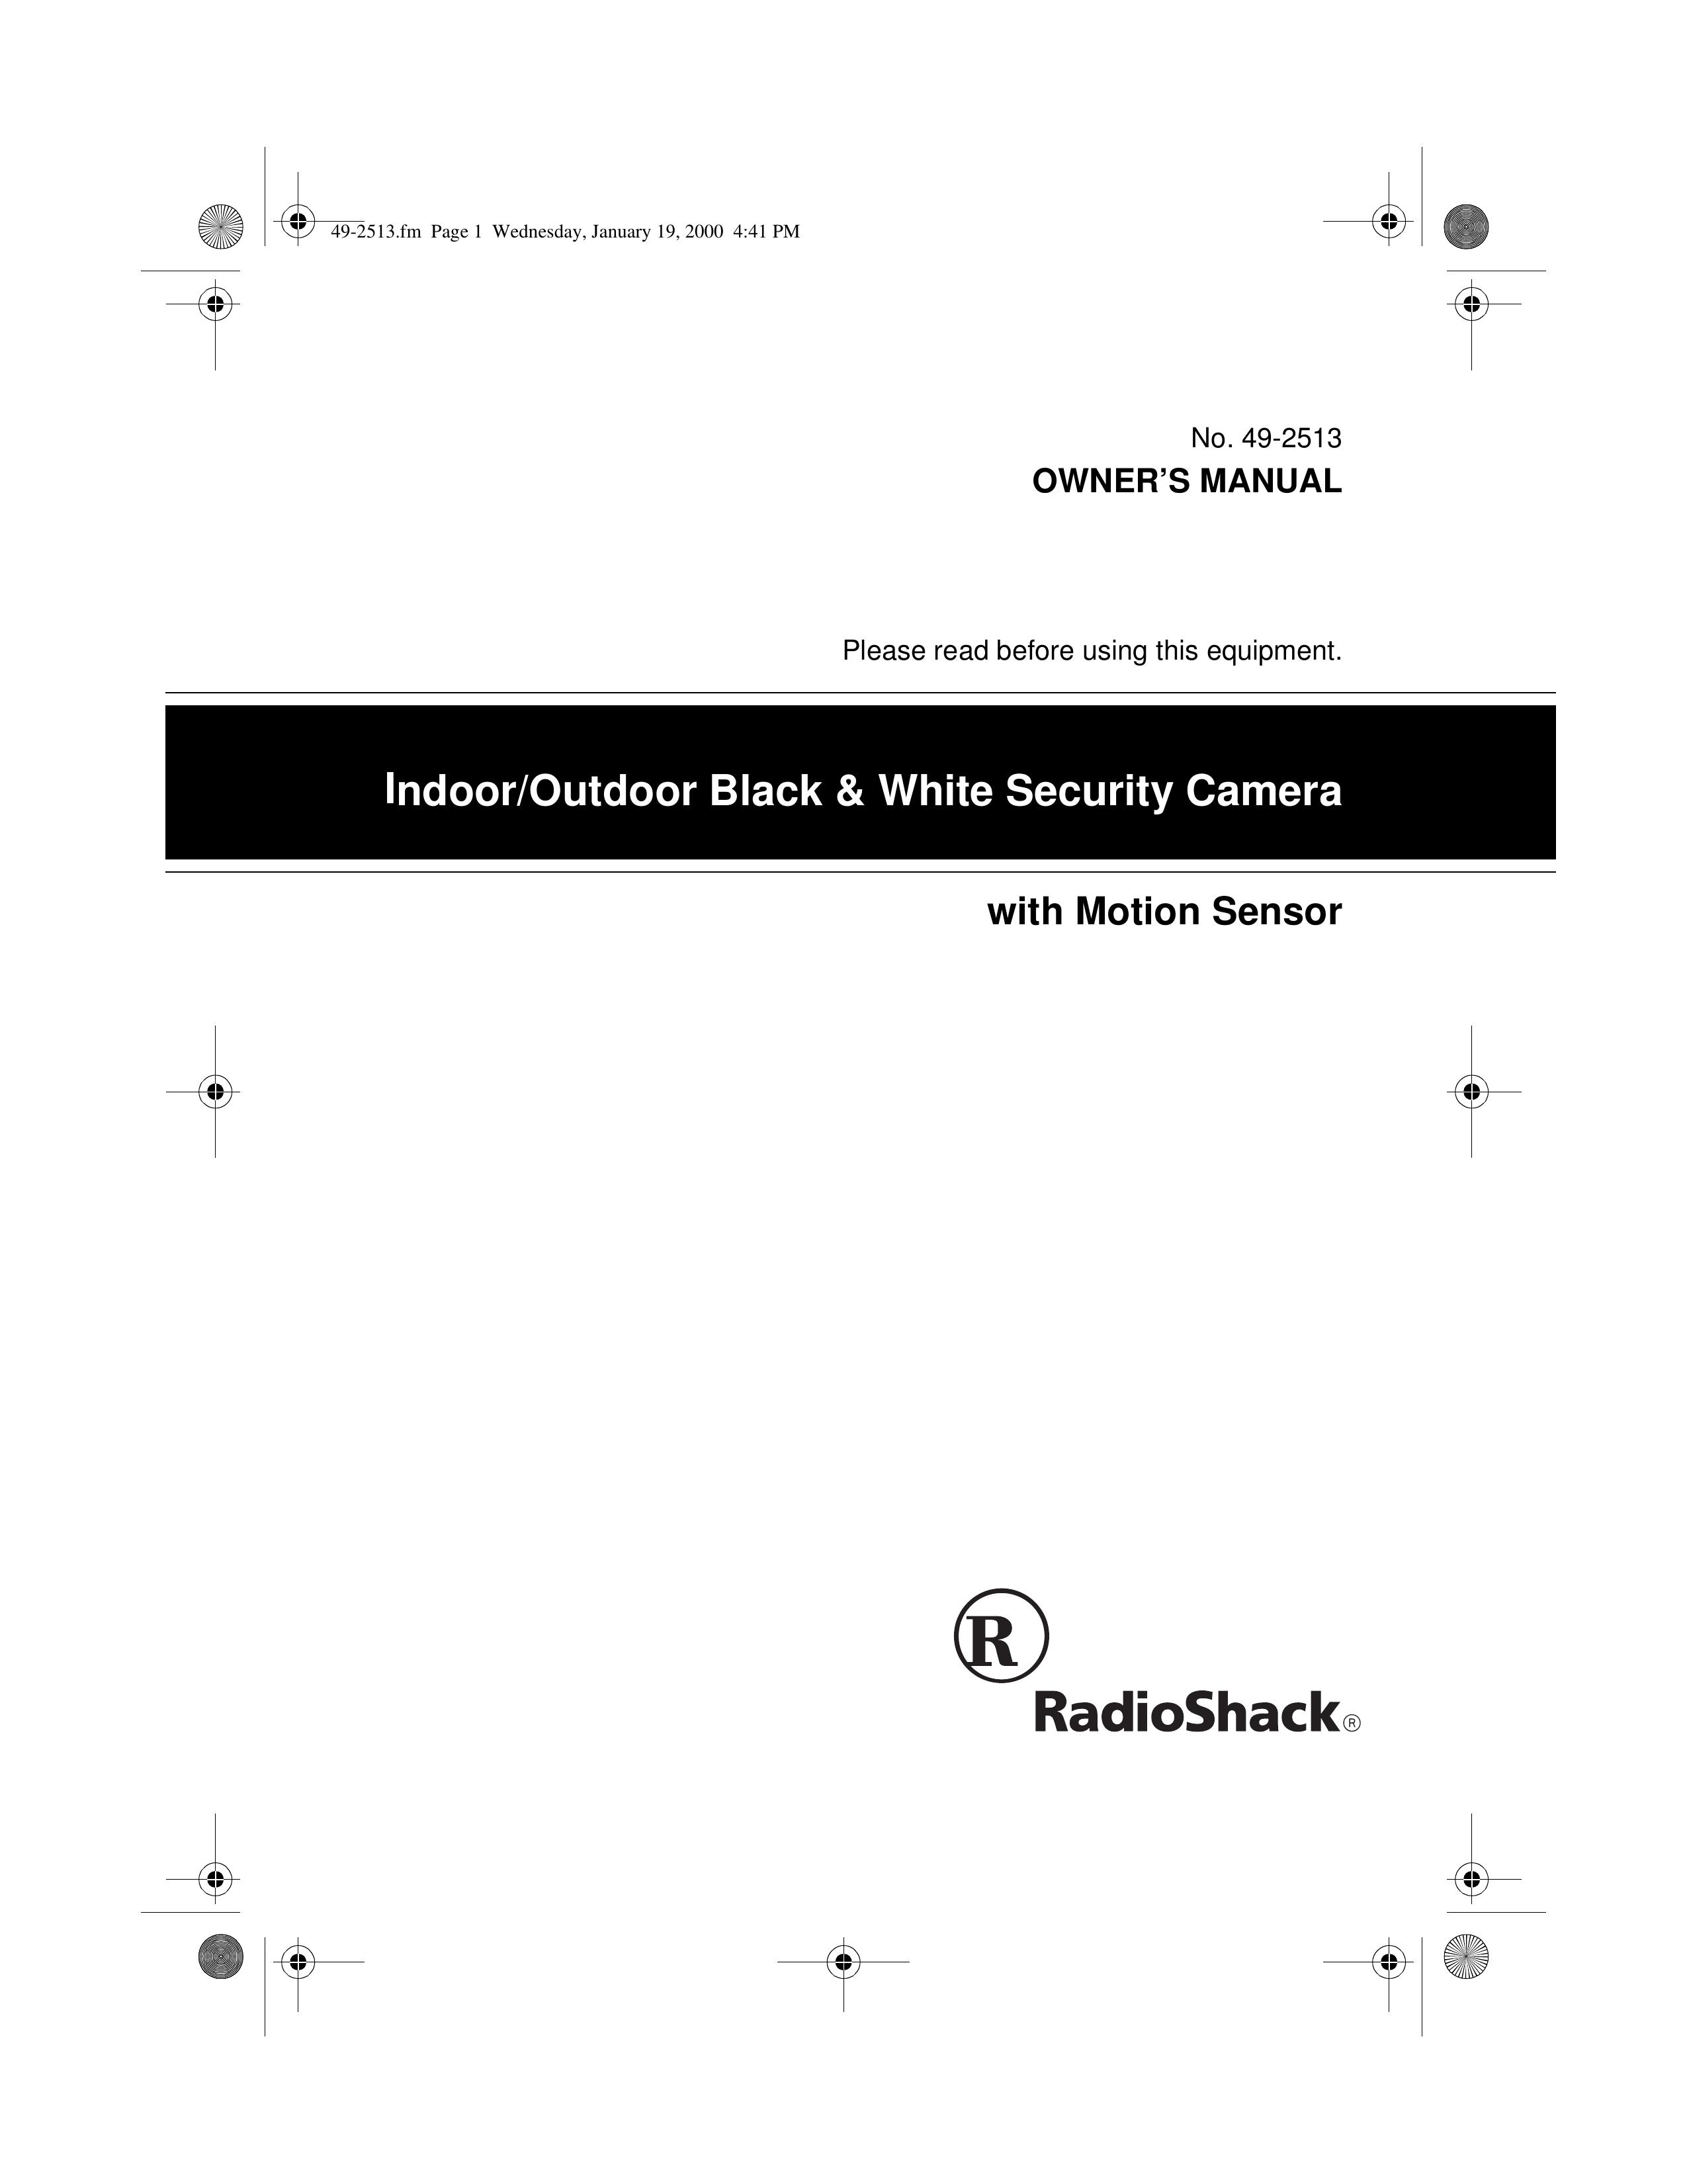 Radio Shack 49-2513 Security Camera User Manual